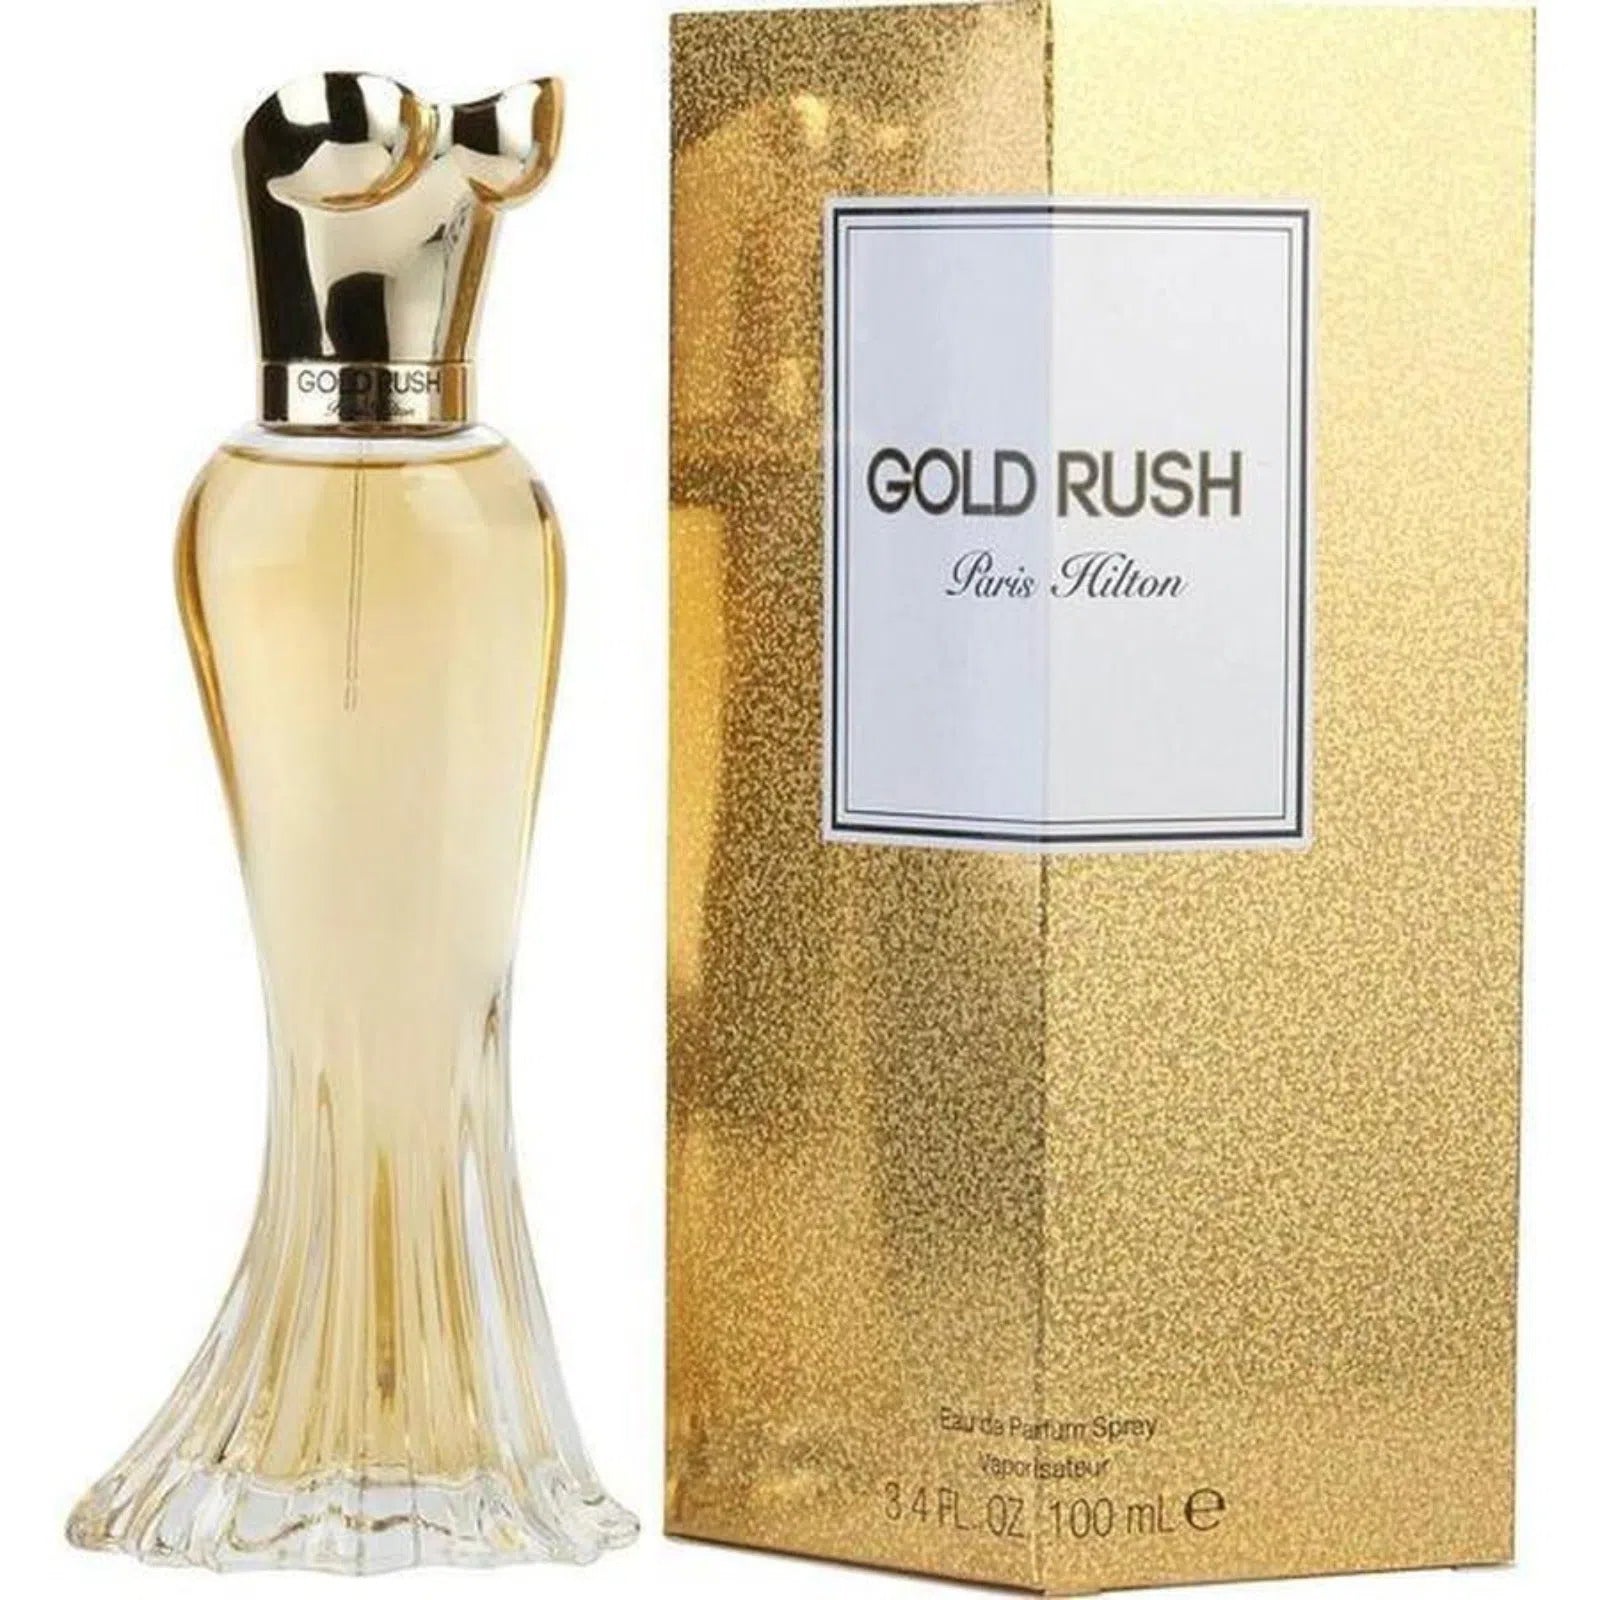 Perfume Paris Hilton Gold Rush EDP (W) / 100 ml - 608940565056- Prive Perfumes Honduras